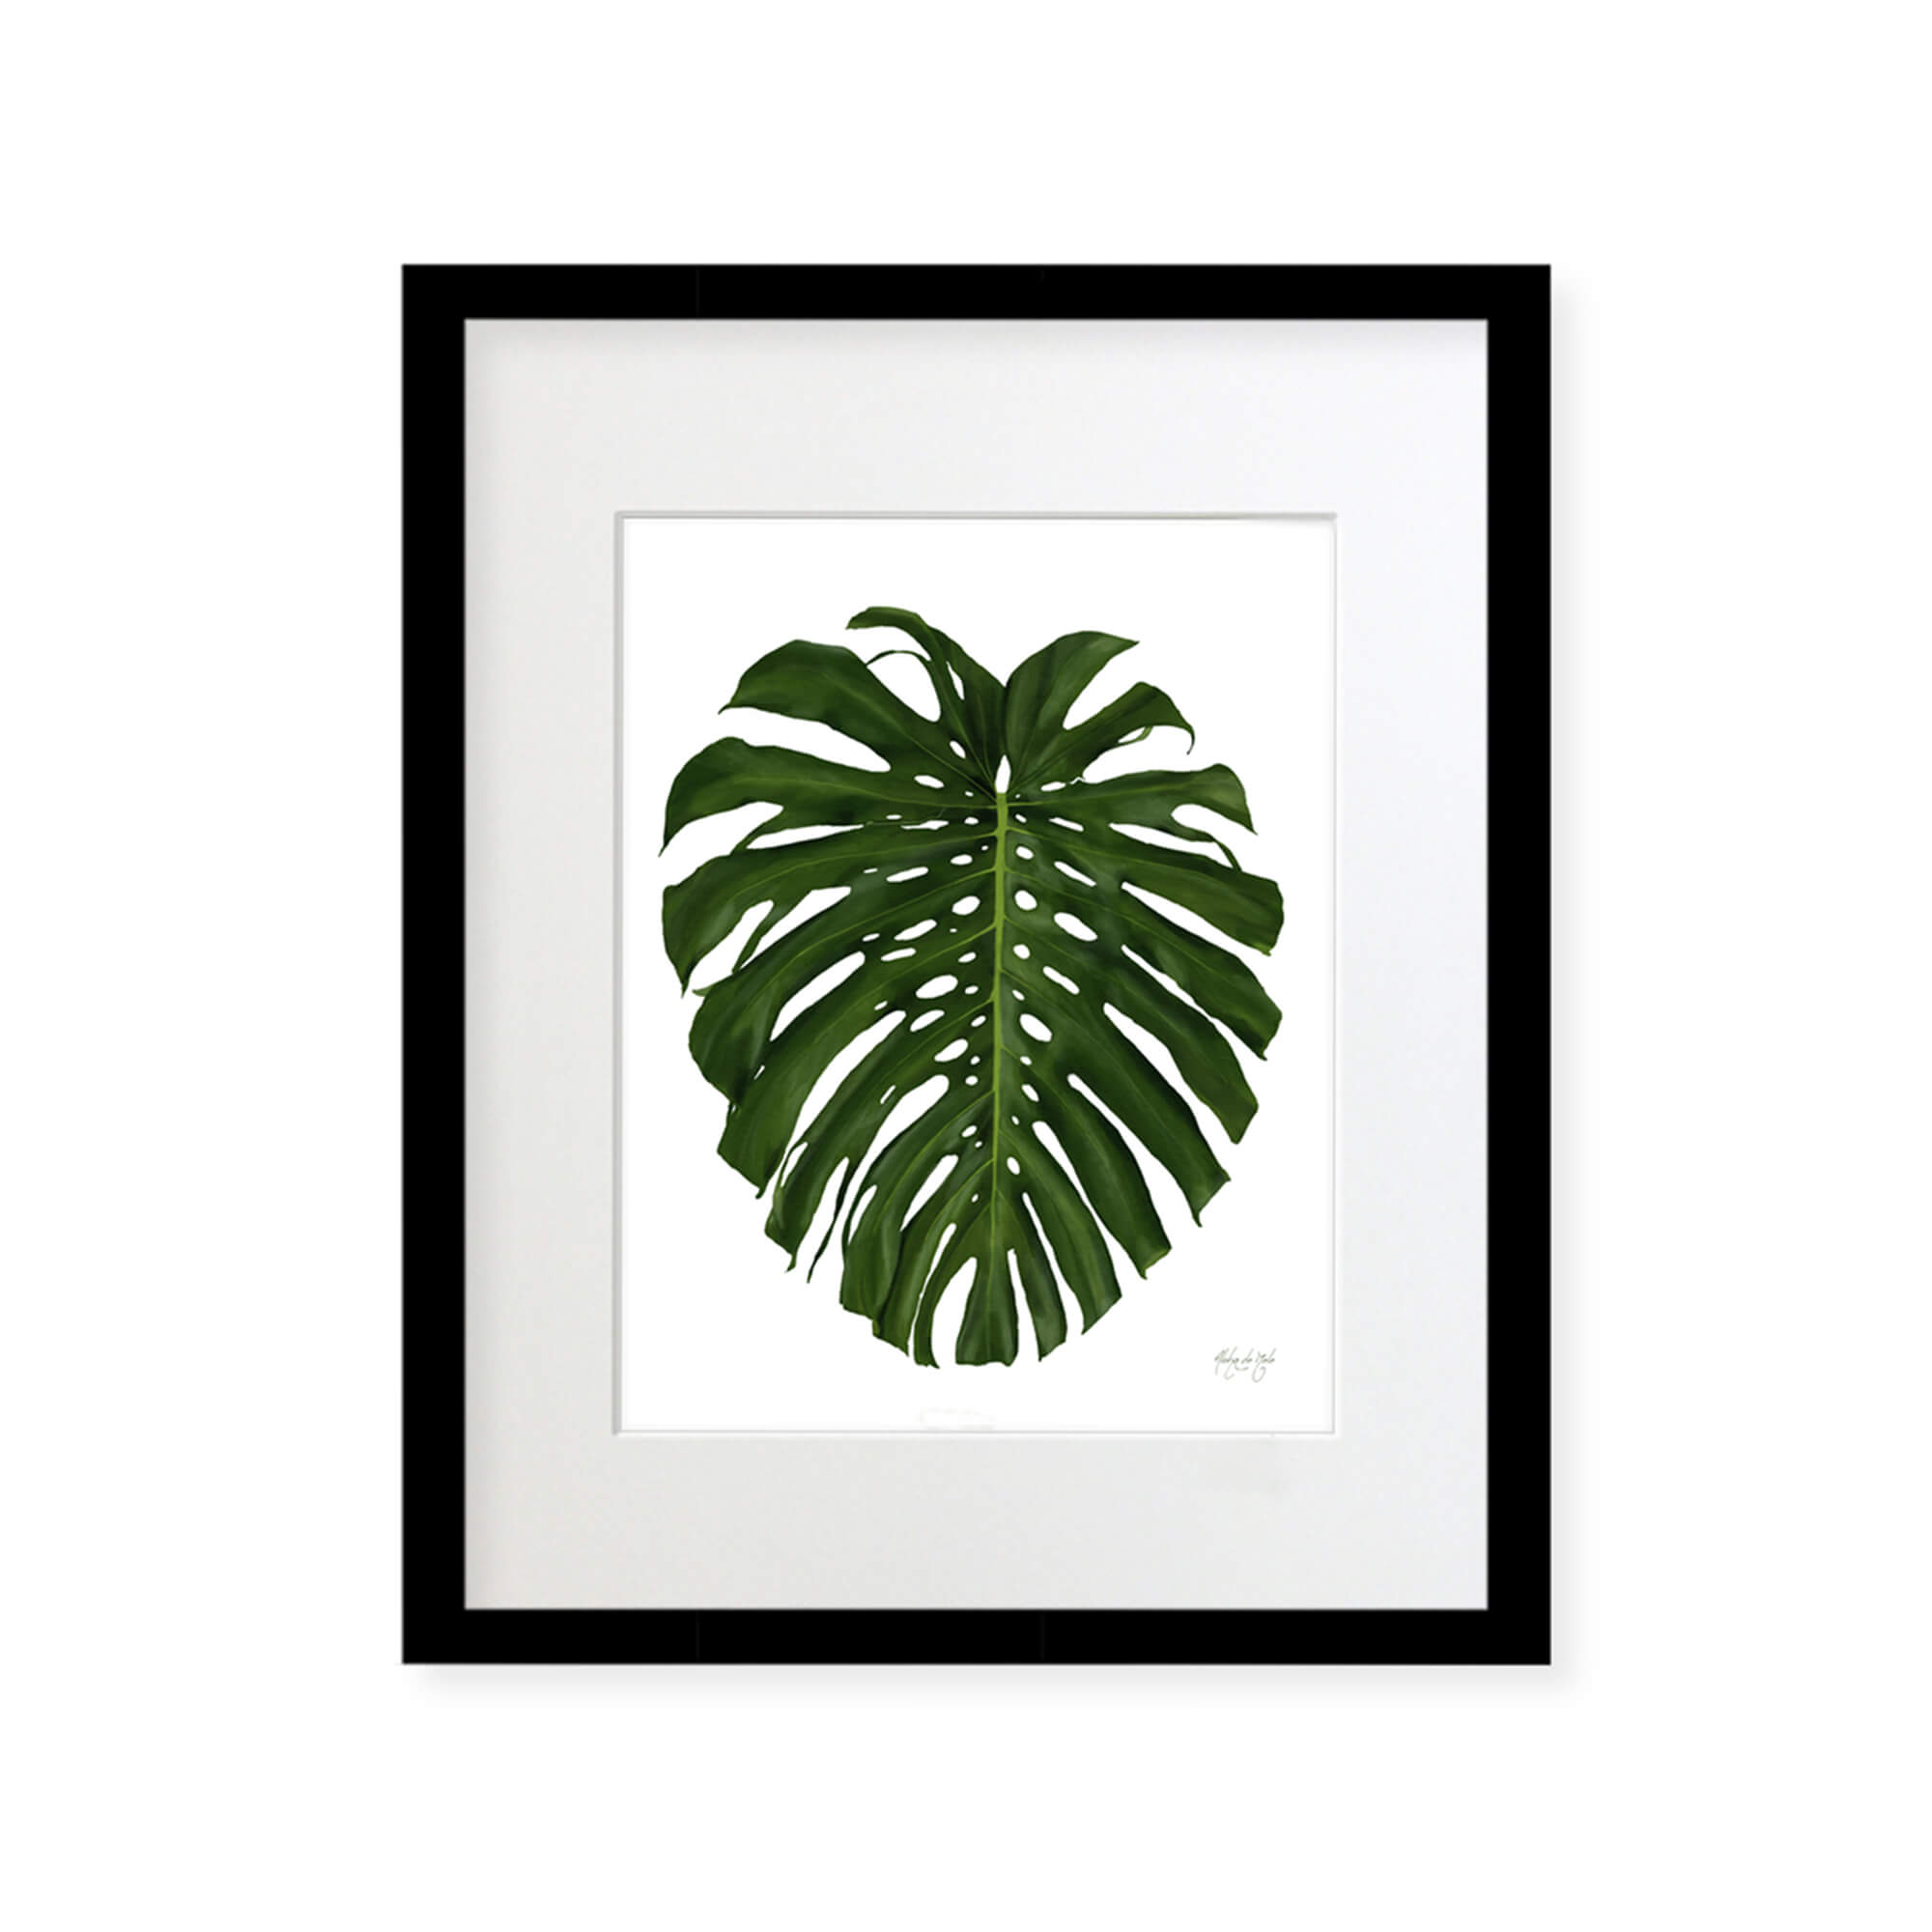 A framed matted art print of a beautifully painted monstera leaf by Hawaii artist Aloha De Mele